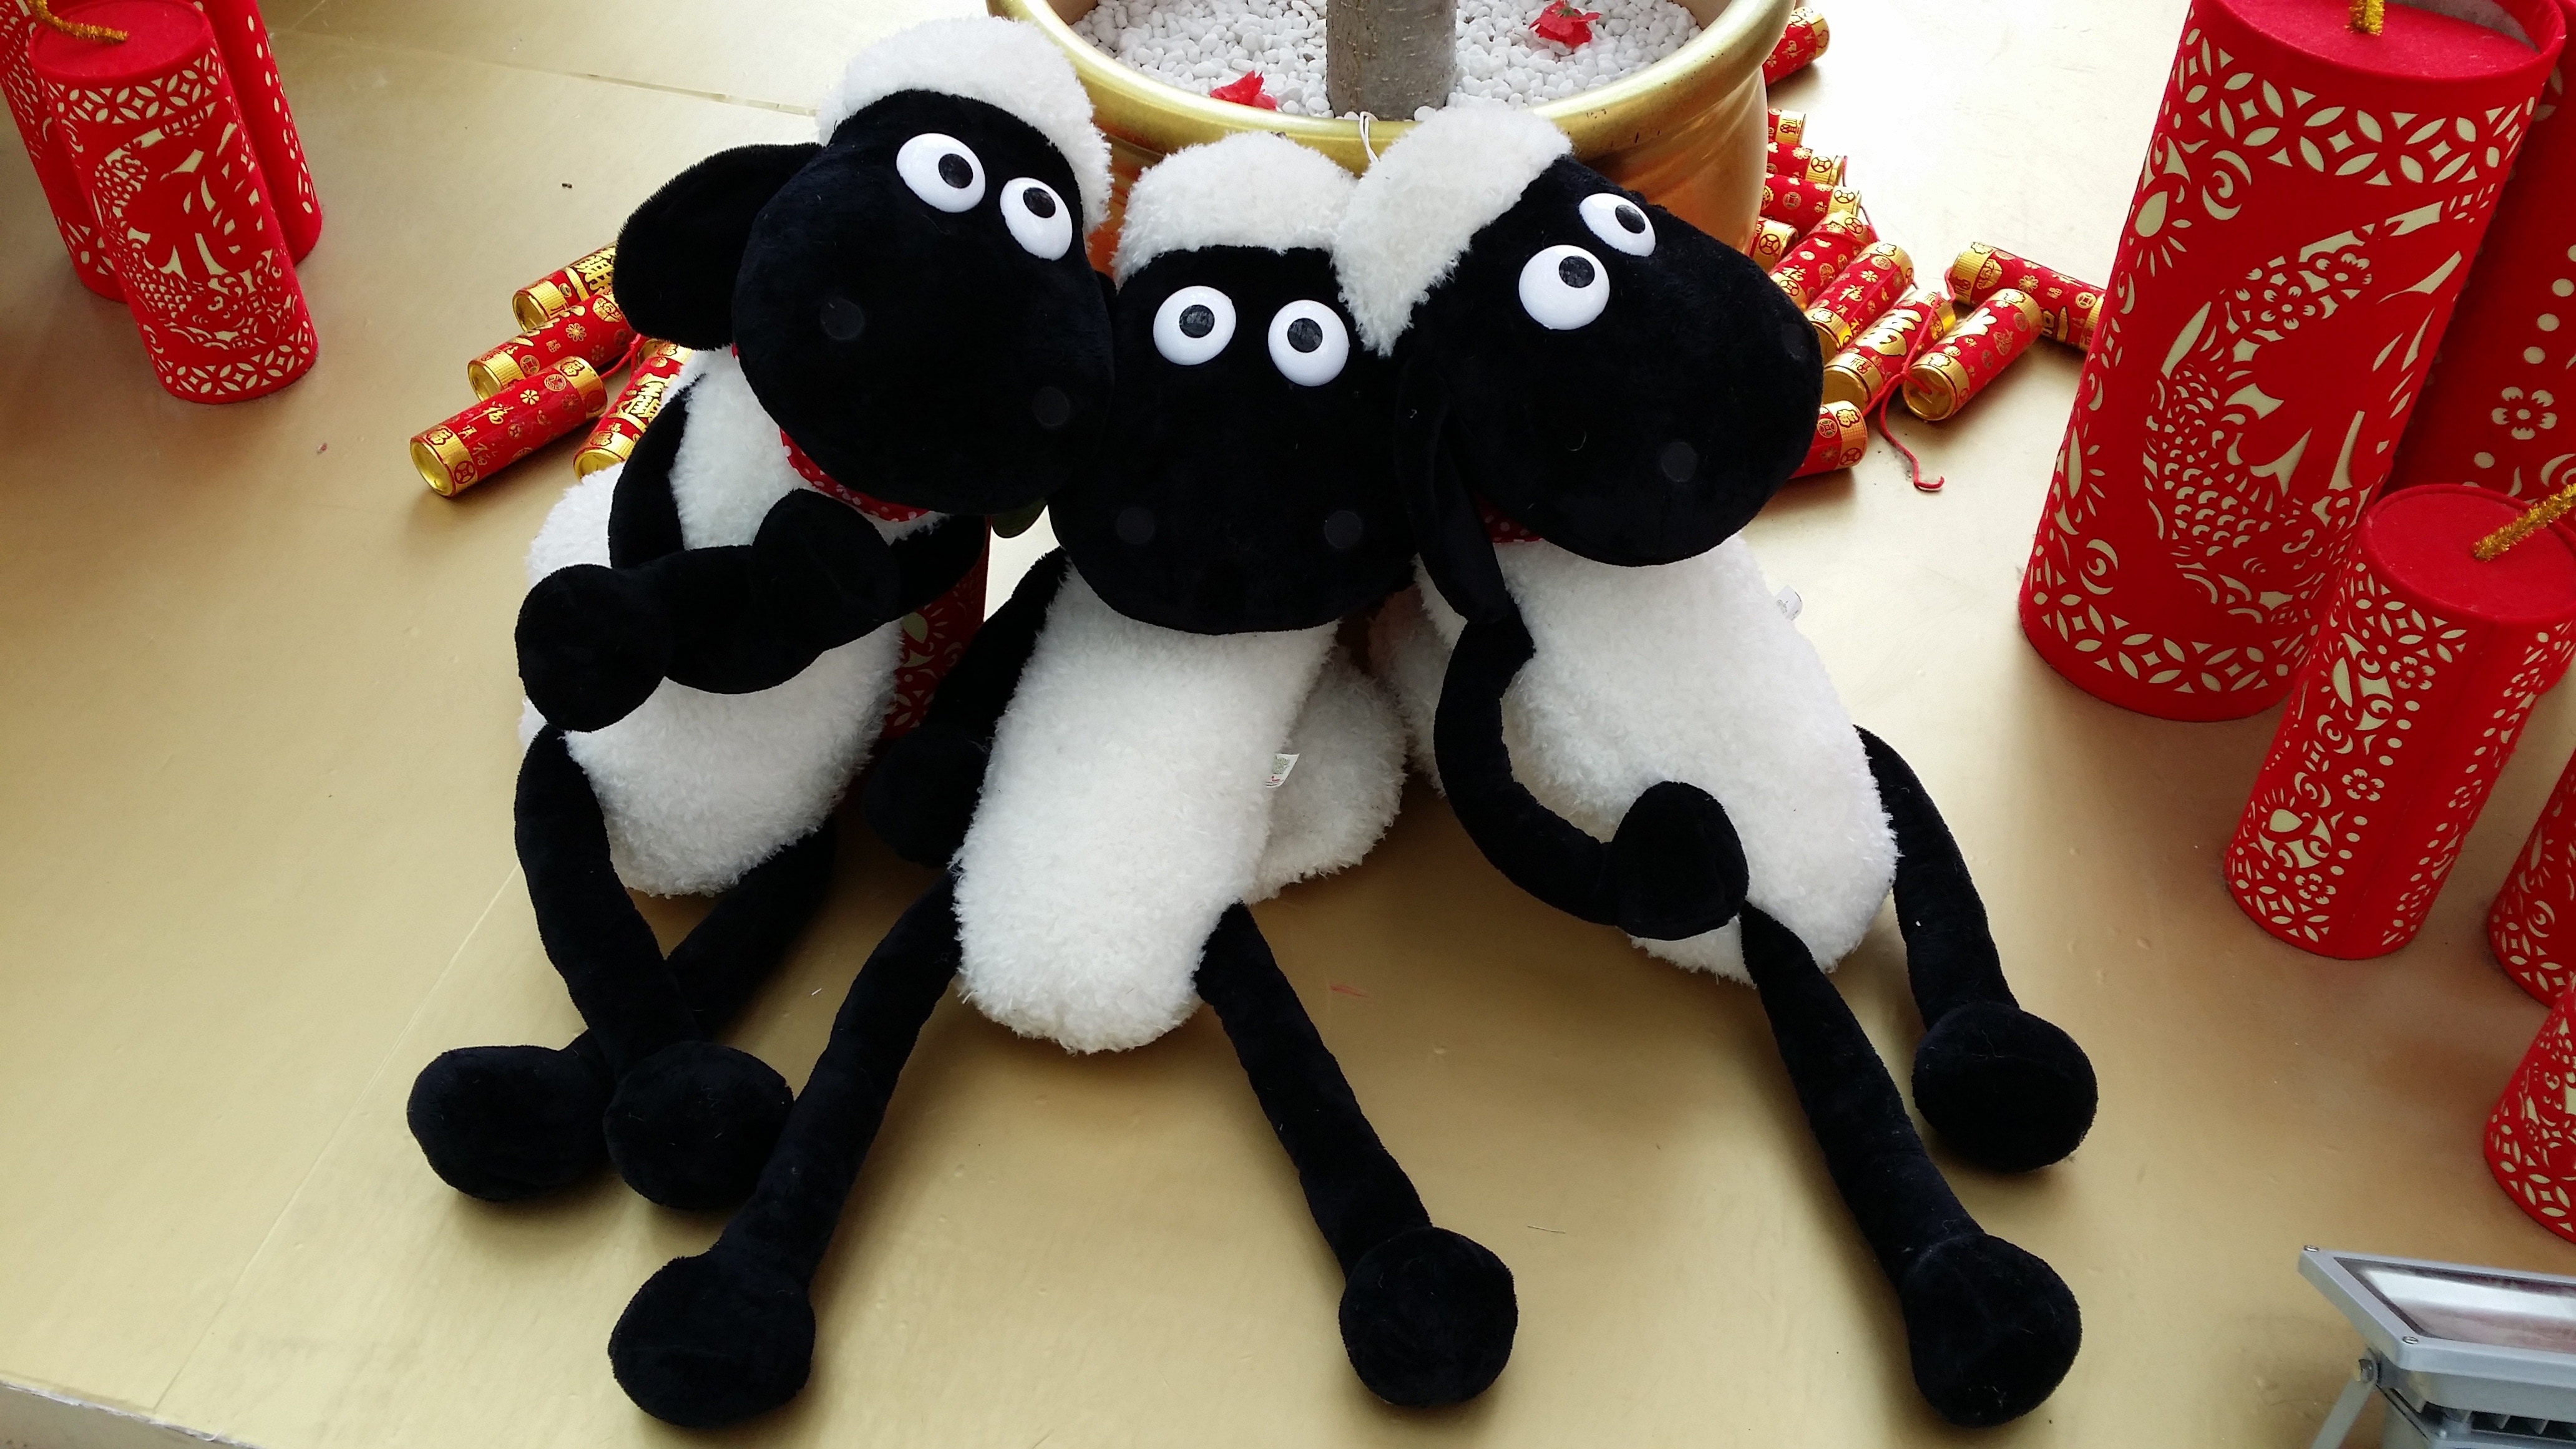 3 white and black llama plush toys